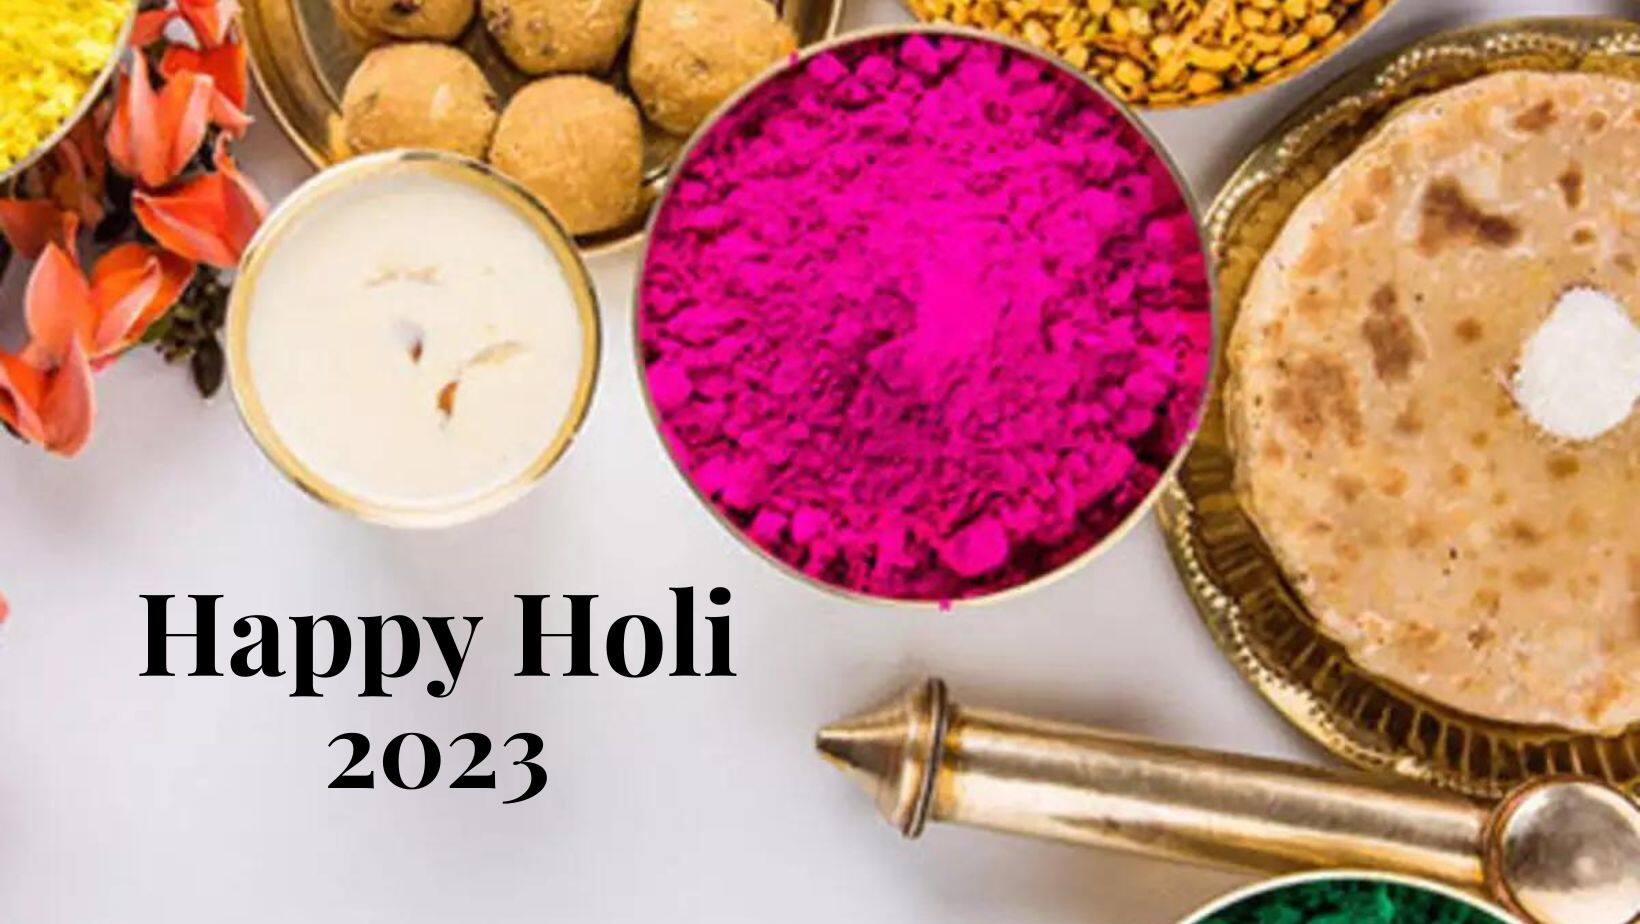 Holi 2023: Vegan Recipes For a Colorful Holi Celebration